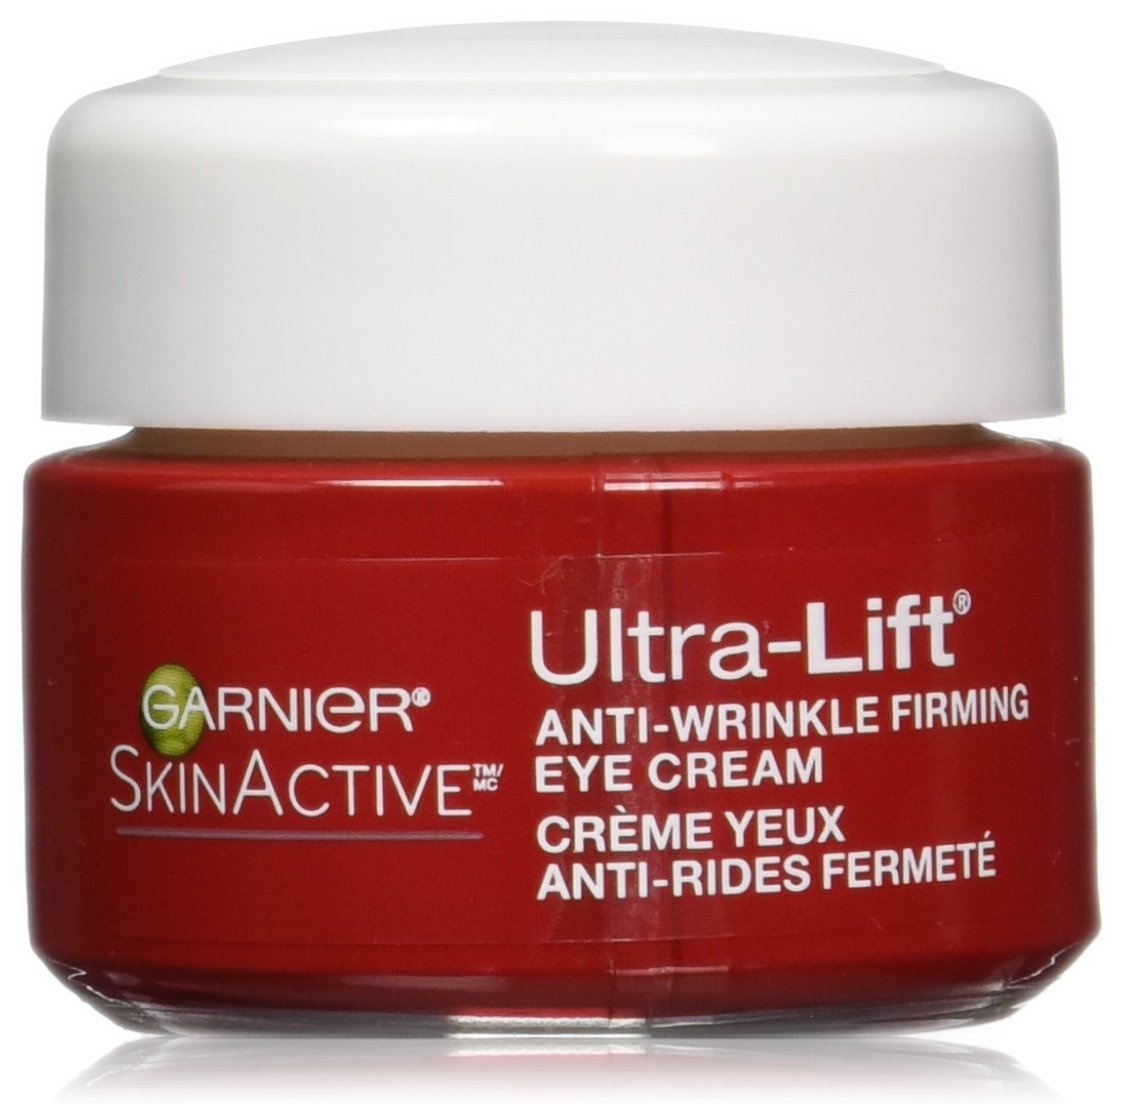 Garnier Skinactive Ultra-Lift Anti-Wrinkle Eye Cream